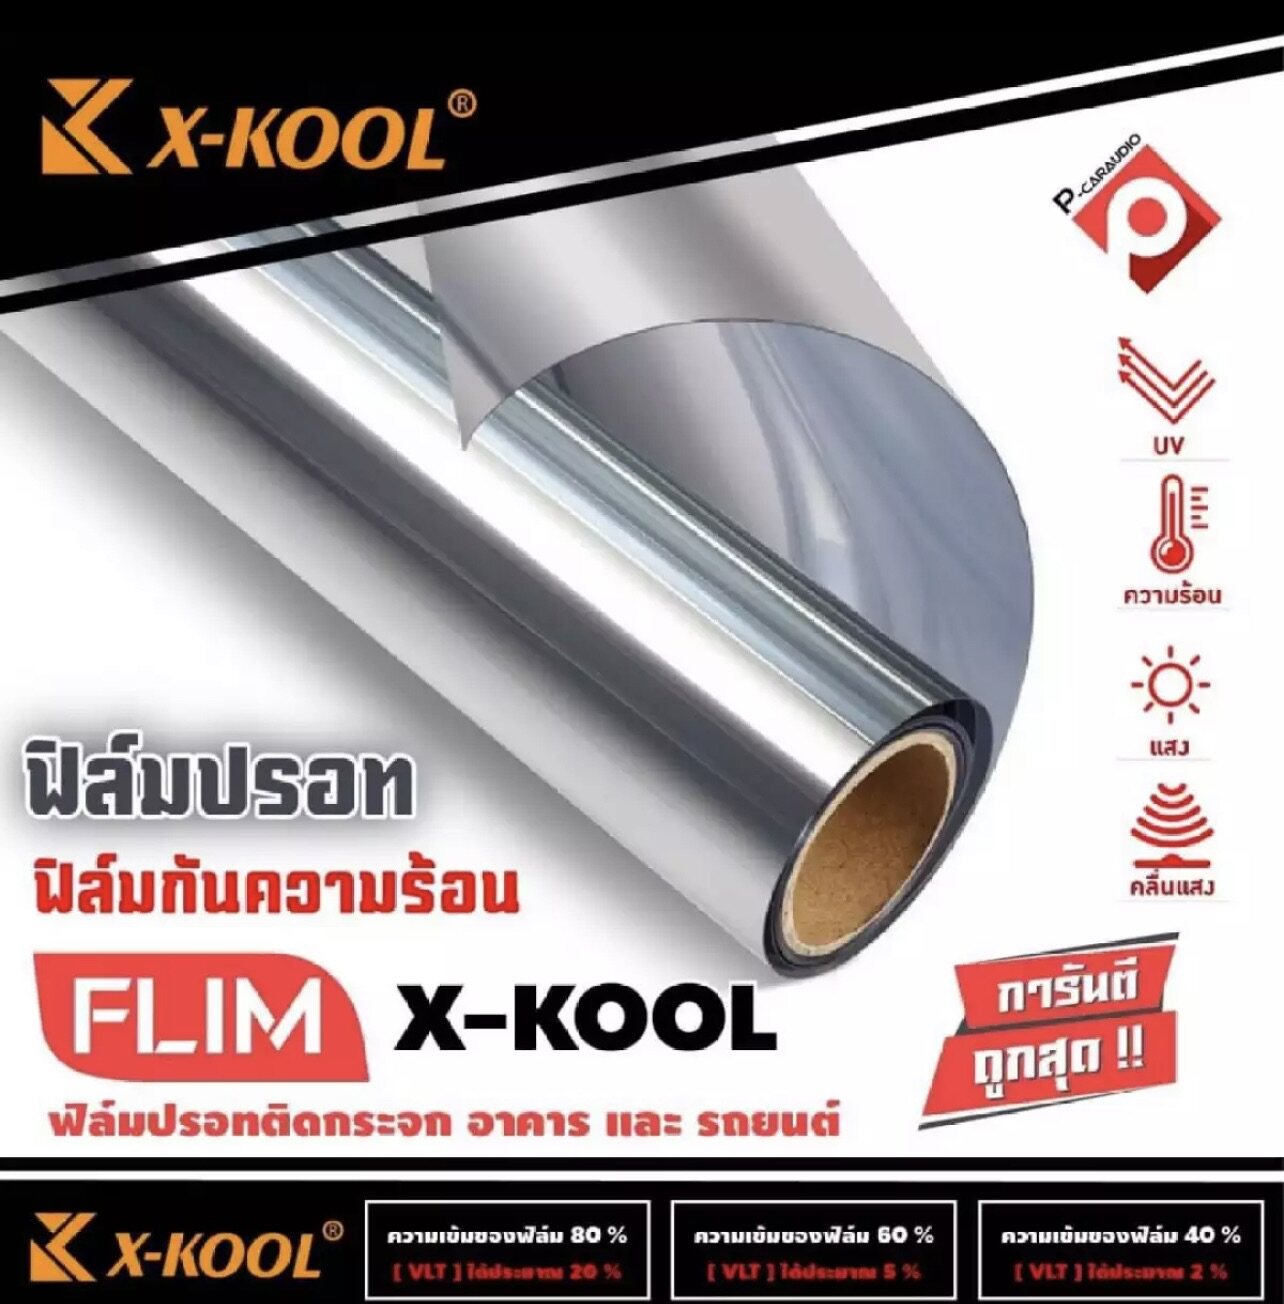 FLIM X-KOOL ฟิล์มกรองแสงเงาปรอดยกม้วน ฟิล์มติดรถยนต์เงาปรอด ฟิล์มติดอาคาร คอนโด หน้าต่าง ประตู กรองแสง 40`�% ขนาด 500 ตารางฟุต ราคา 3,900 บาท